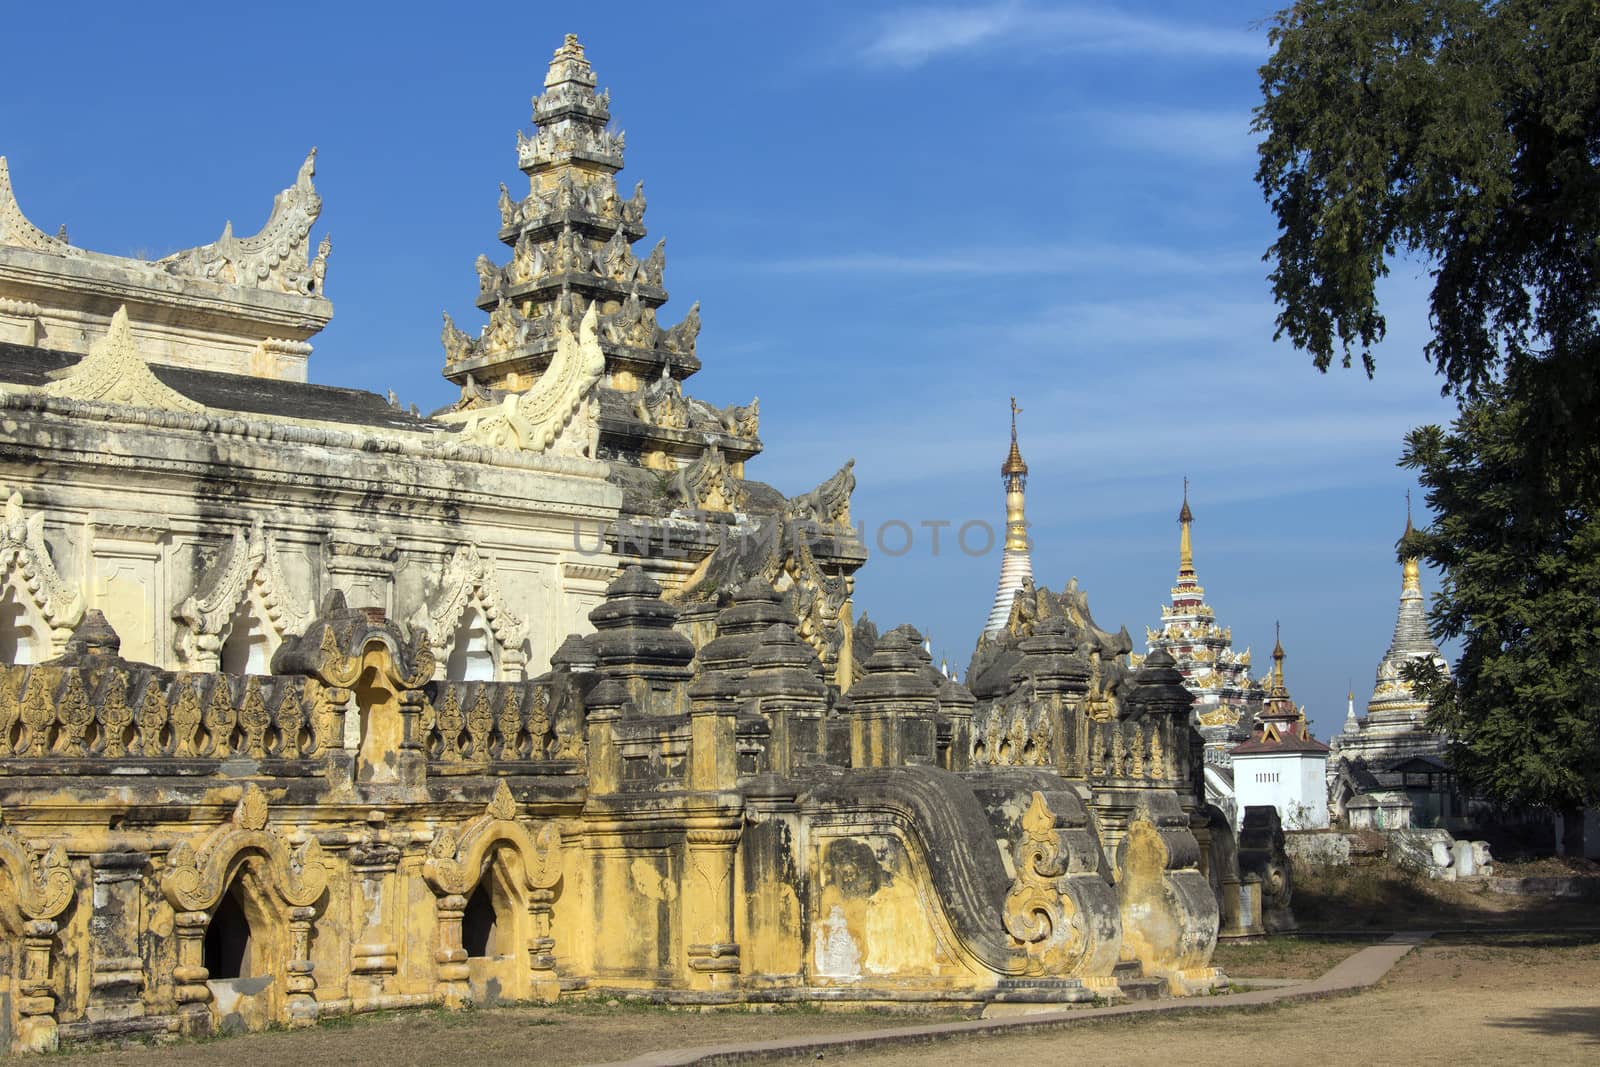 The ruins of the Bagaya Monastery in the ancient city of Innwa (Ava) near Mandalay in Myanmar (Burma).